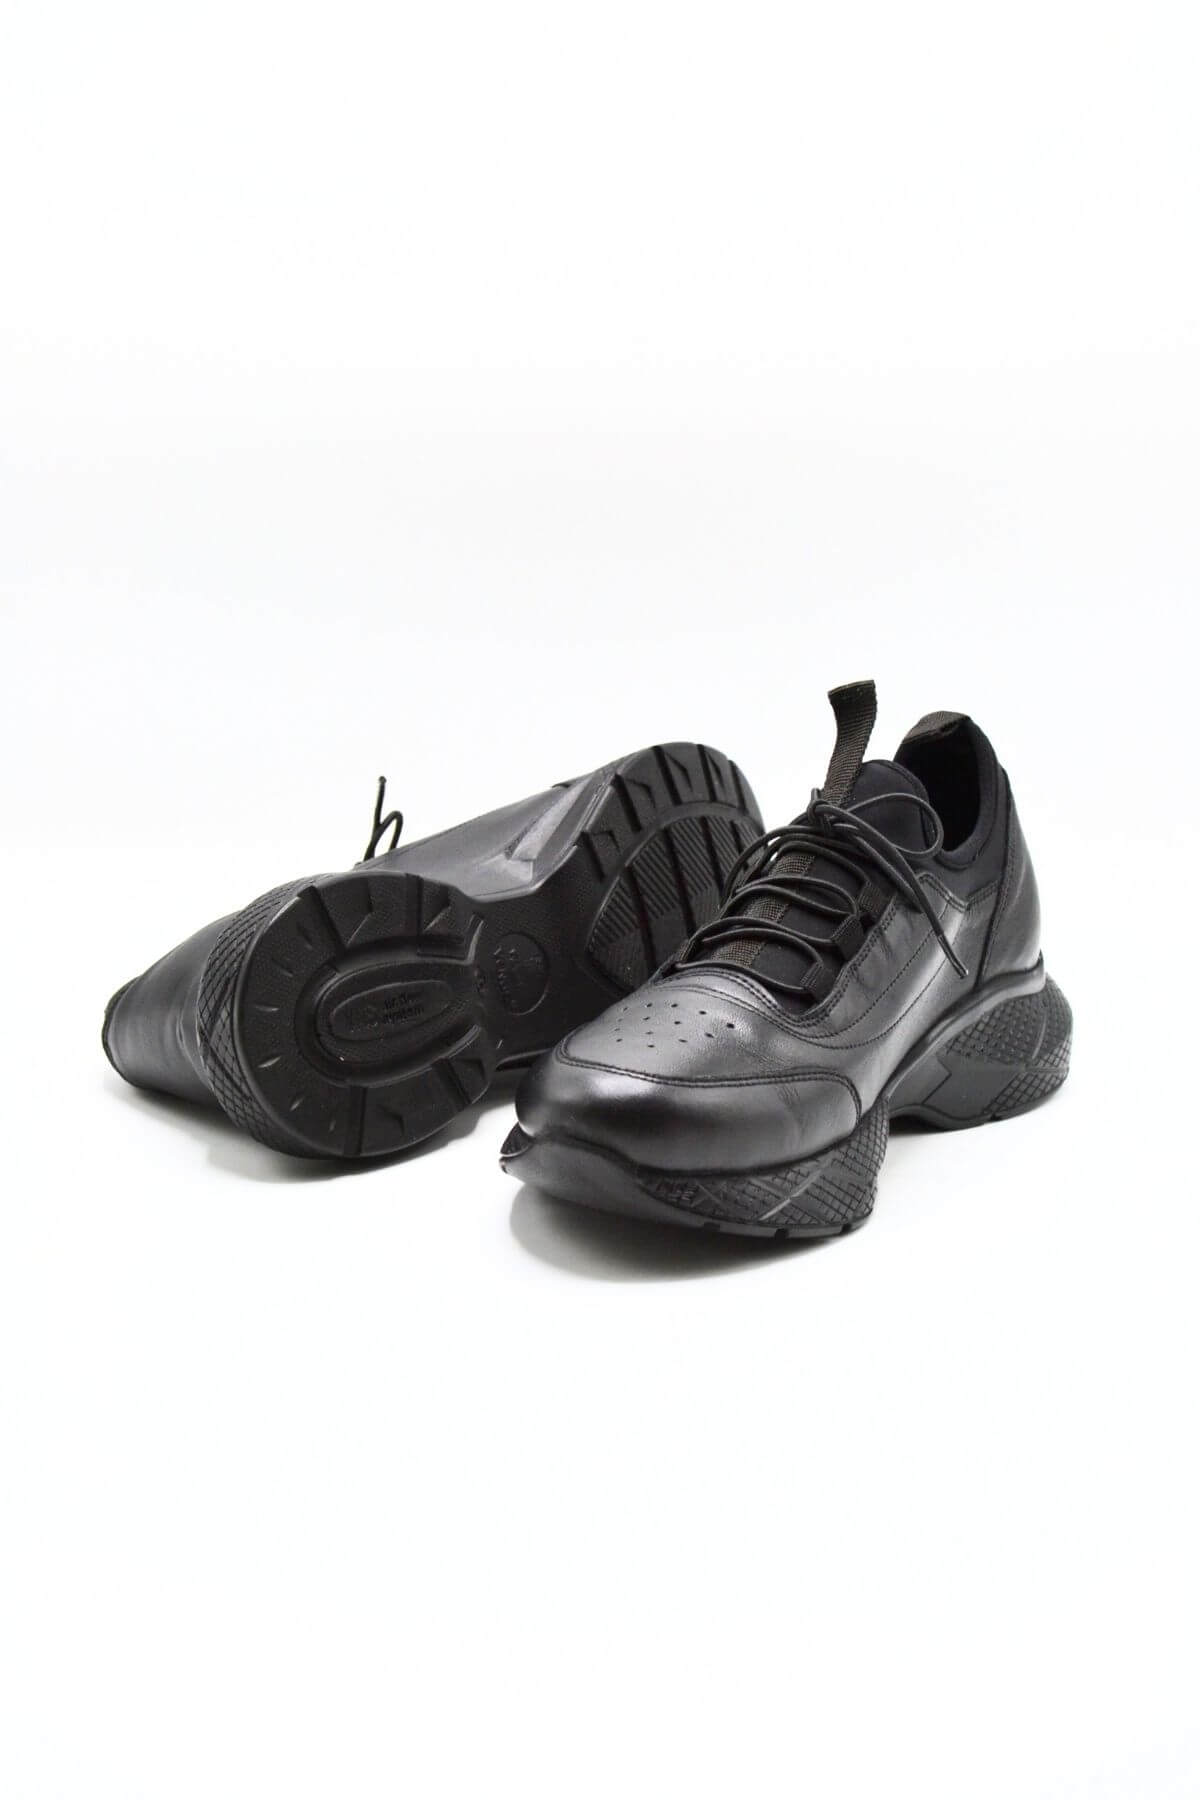 Kadın Airflow Deri Sneakers Siyah 2216603Y - Thumbnail